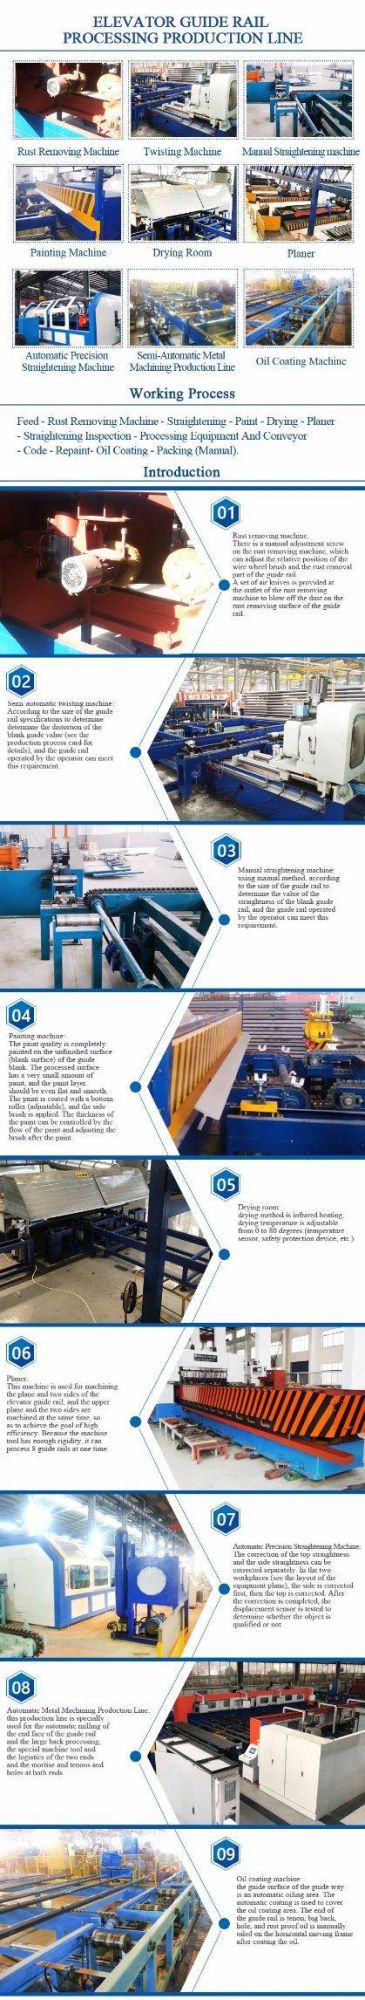 Customized Bracket Hollow Lift Guide Rail Elevator Manufacture Machine